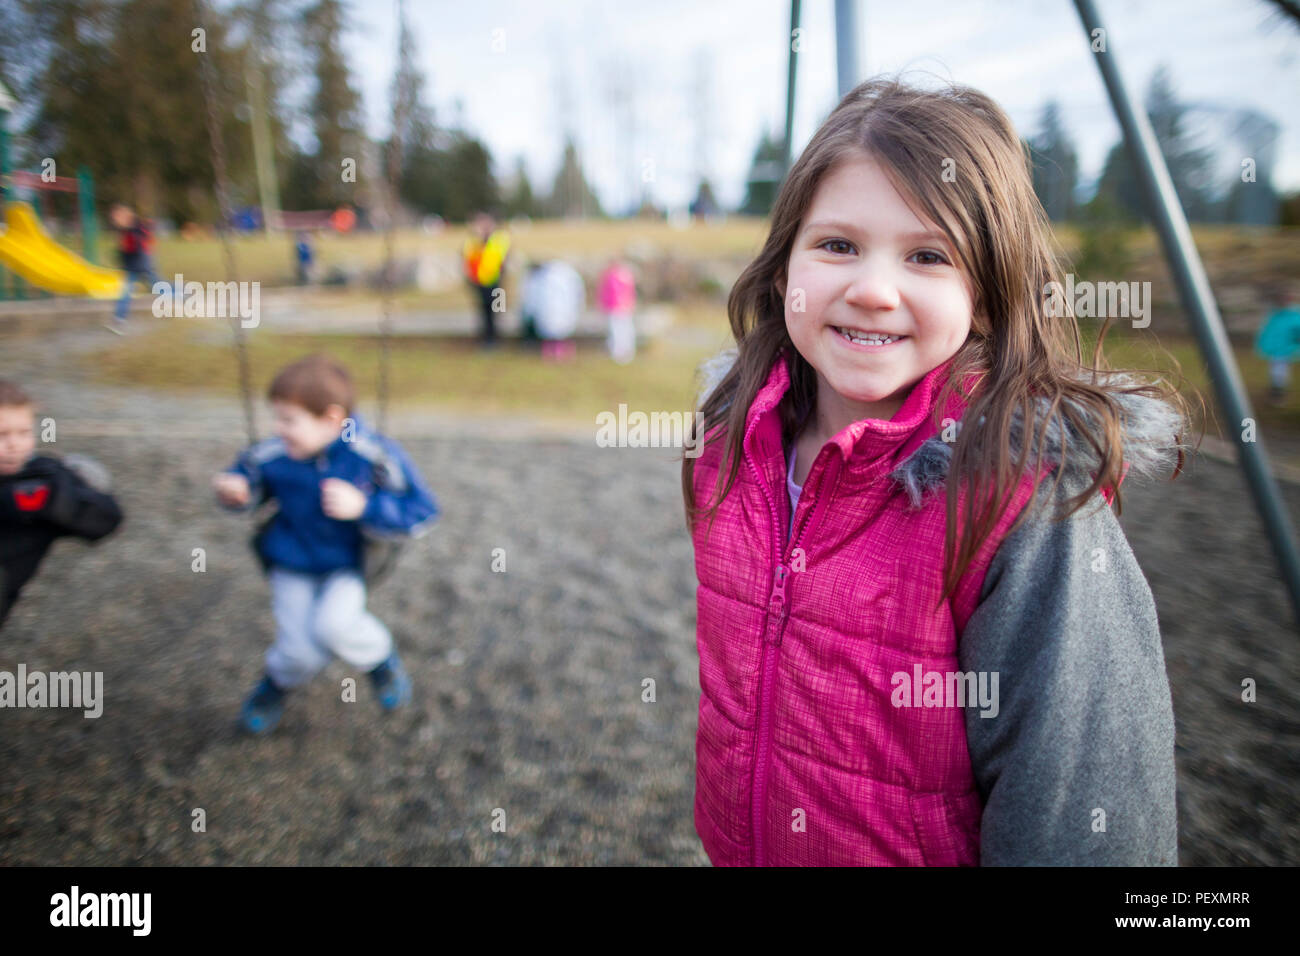 Portrait of girl on school playground Stock Photo